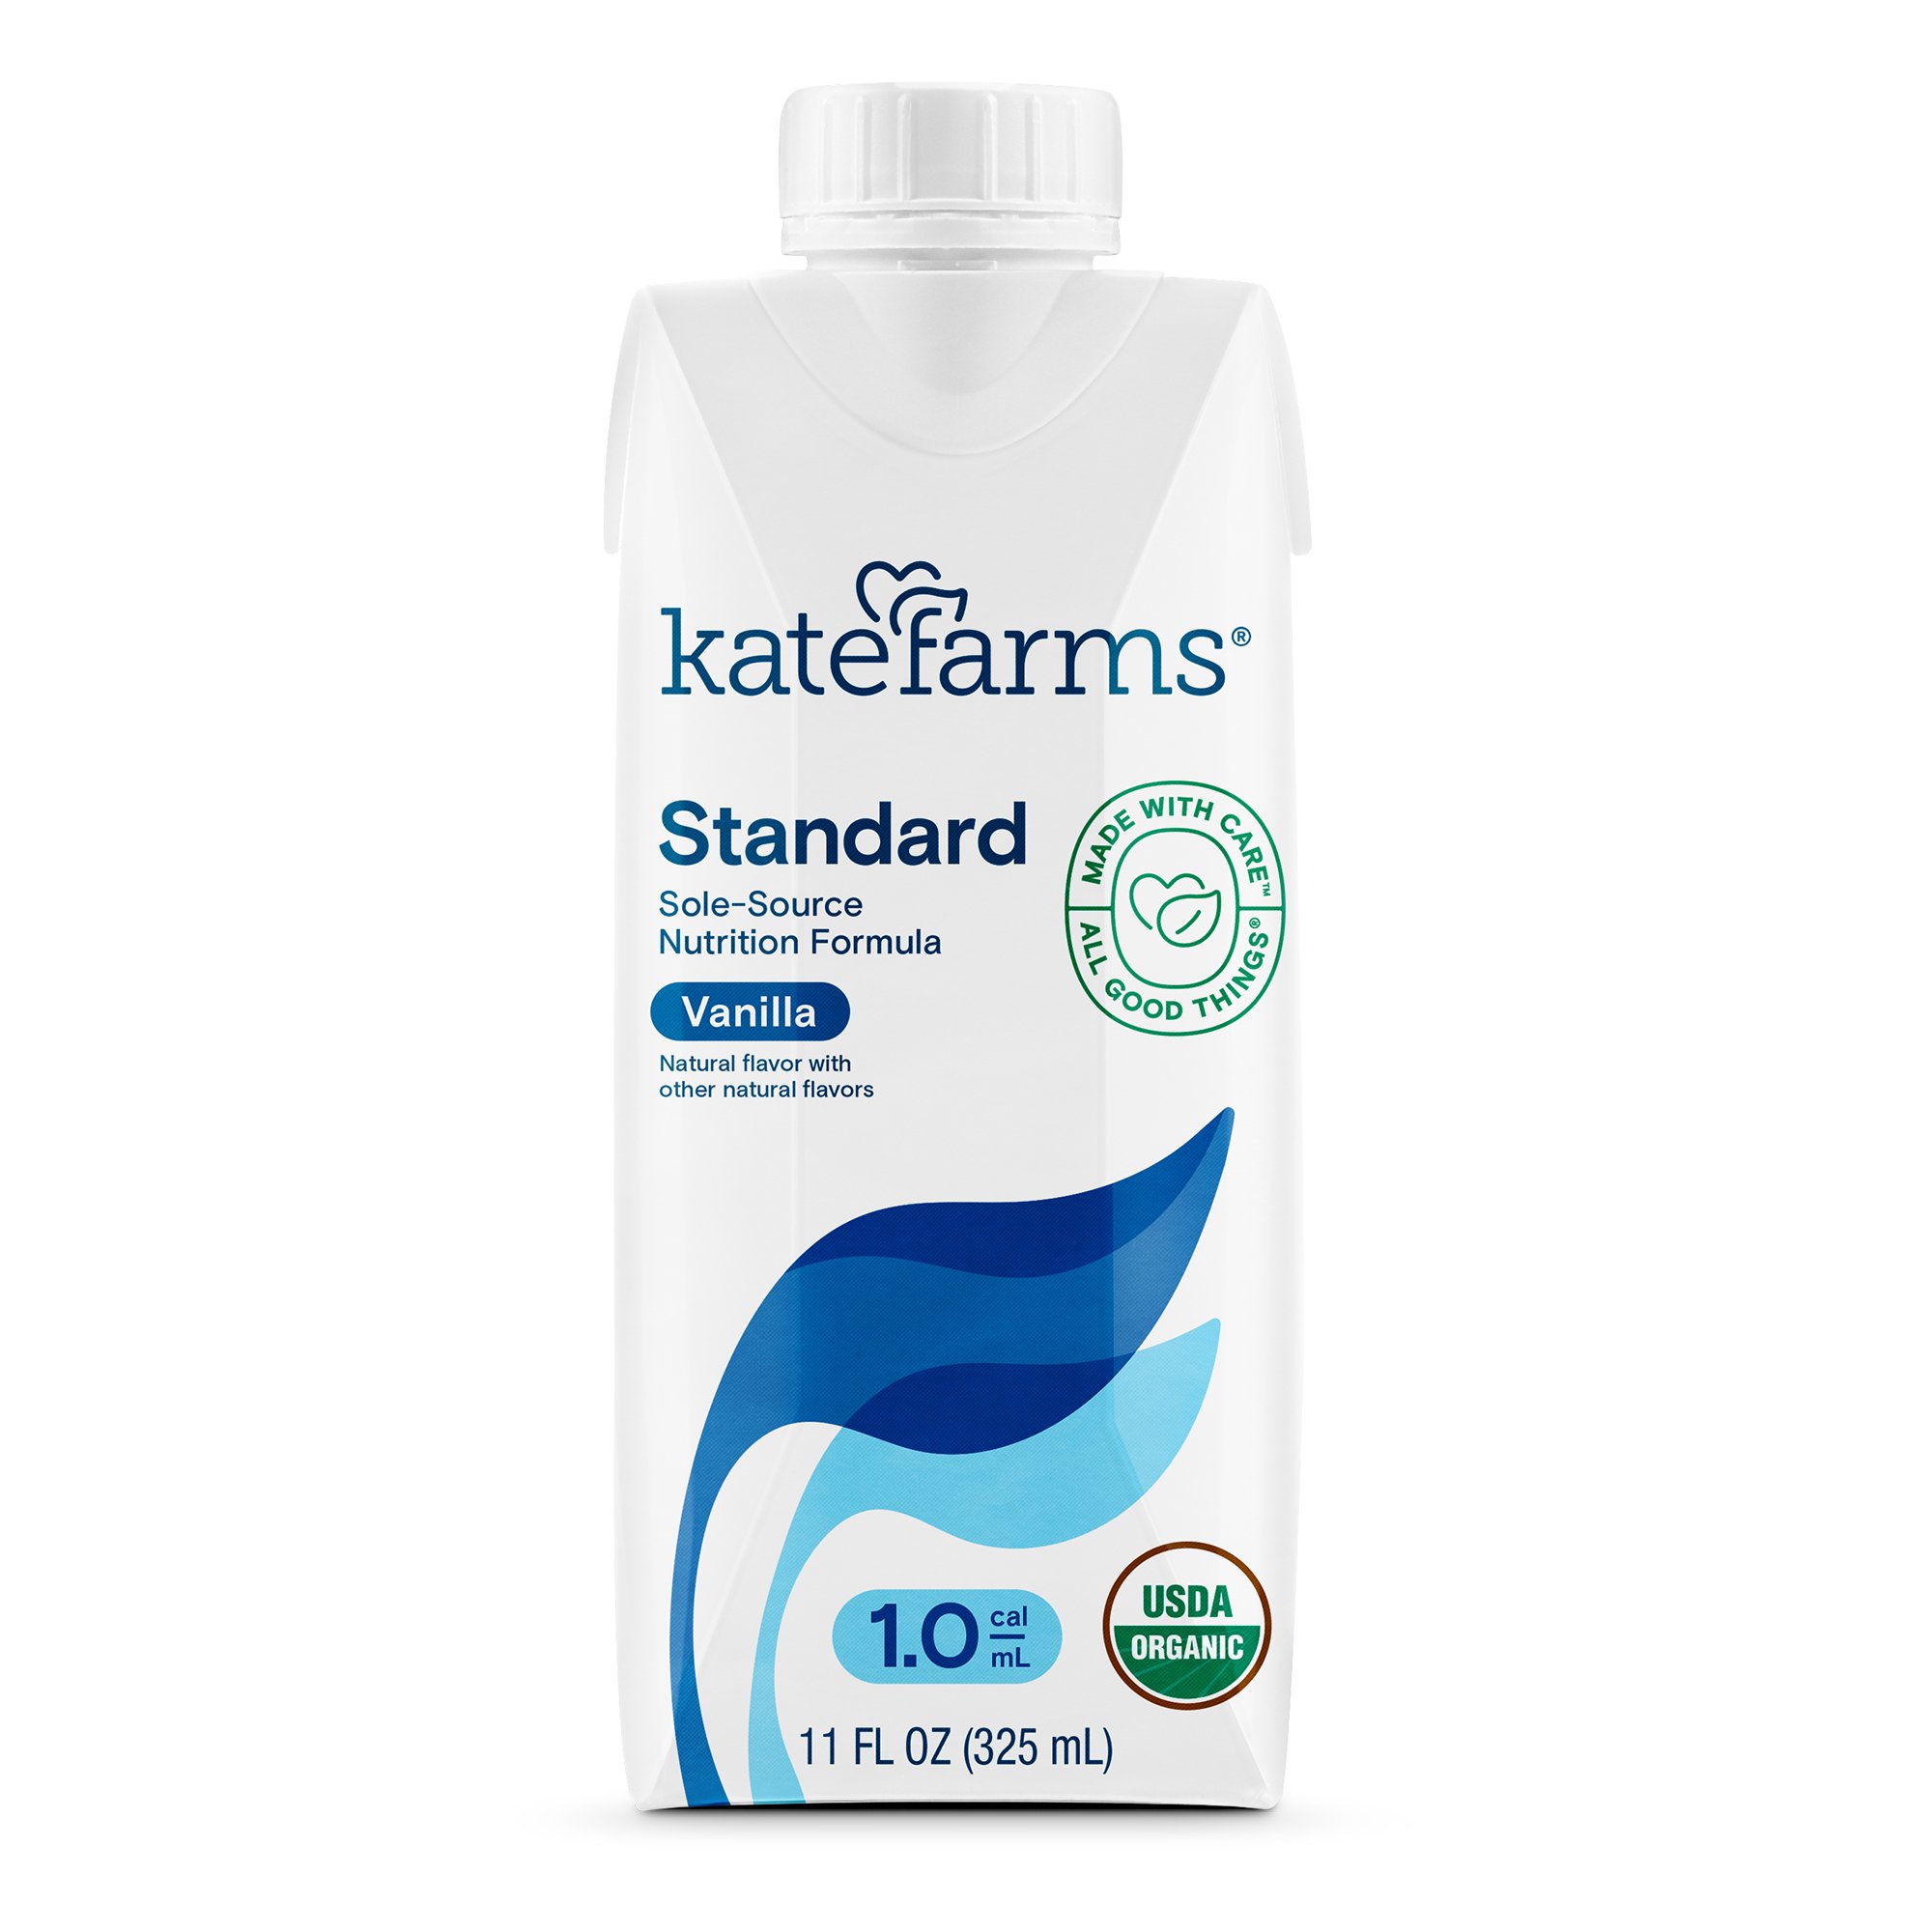 Kate Farms Standard 1.0 Vanilla Sole-Source Nutrition Formula, 11-ounce carton MK 1053181